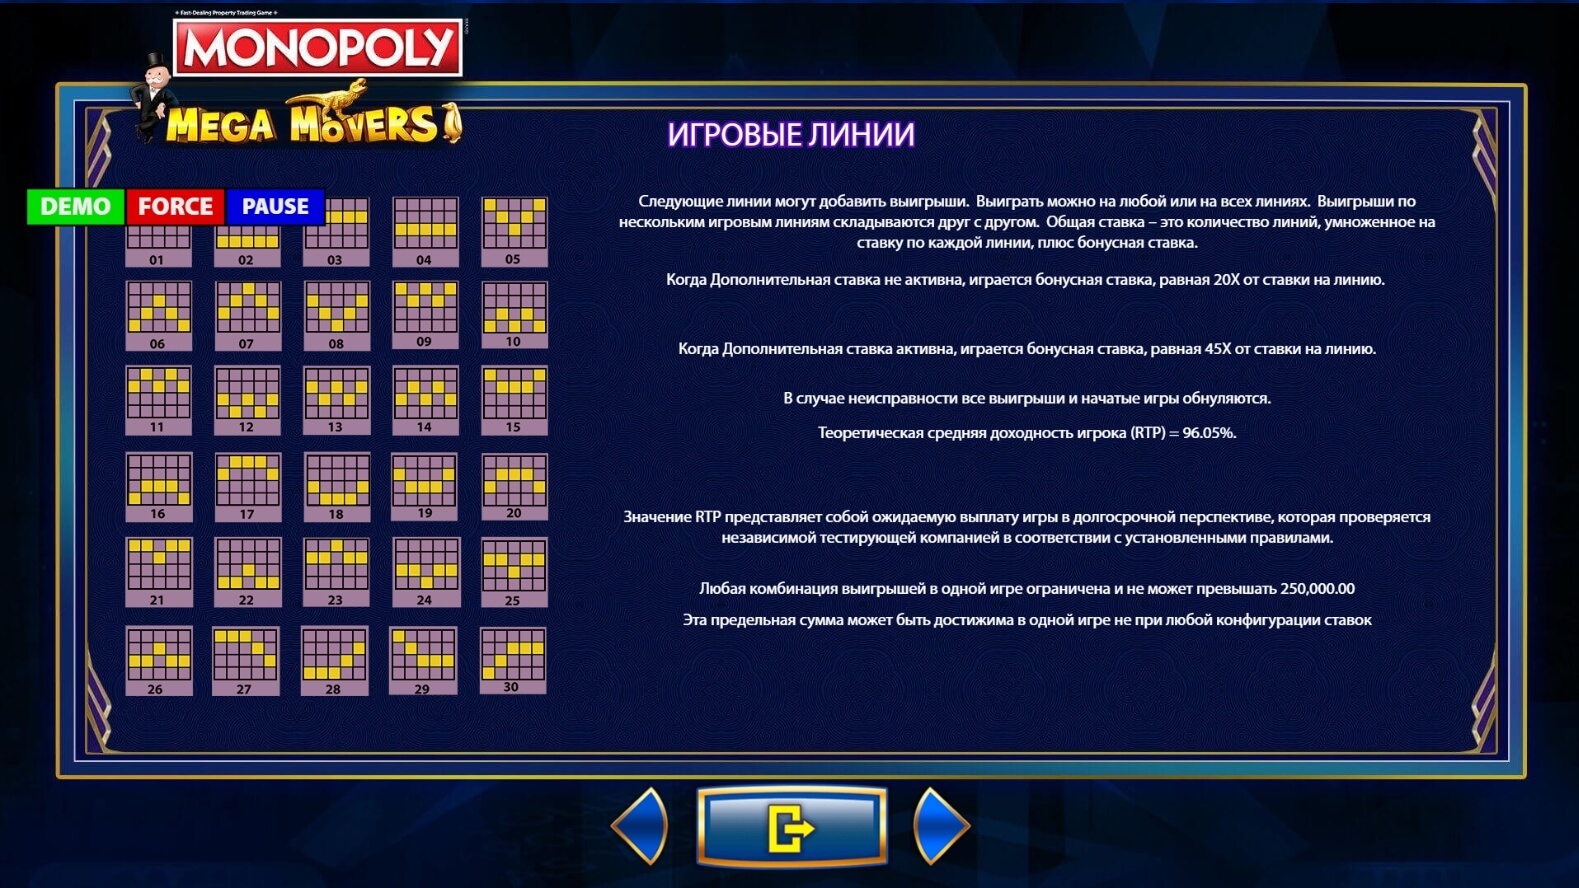 monopoly mega movers slot machine detail image 1